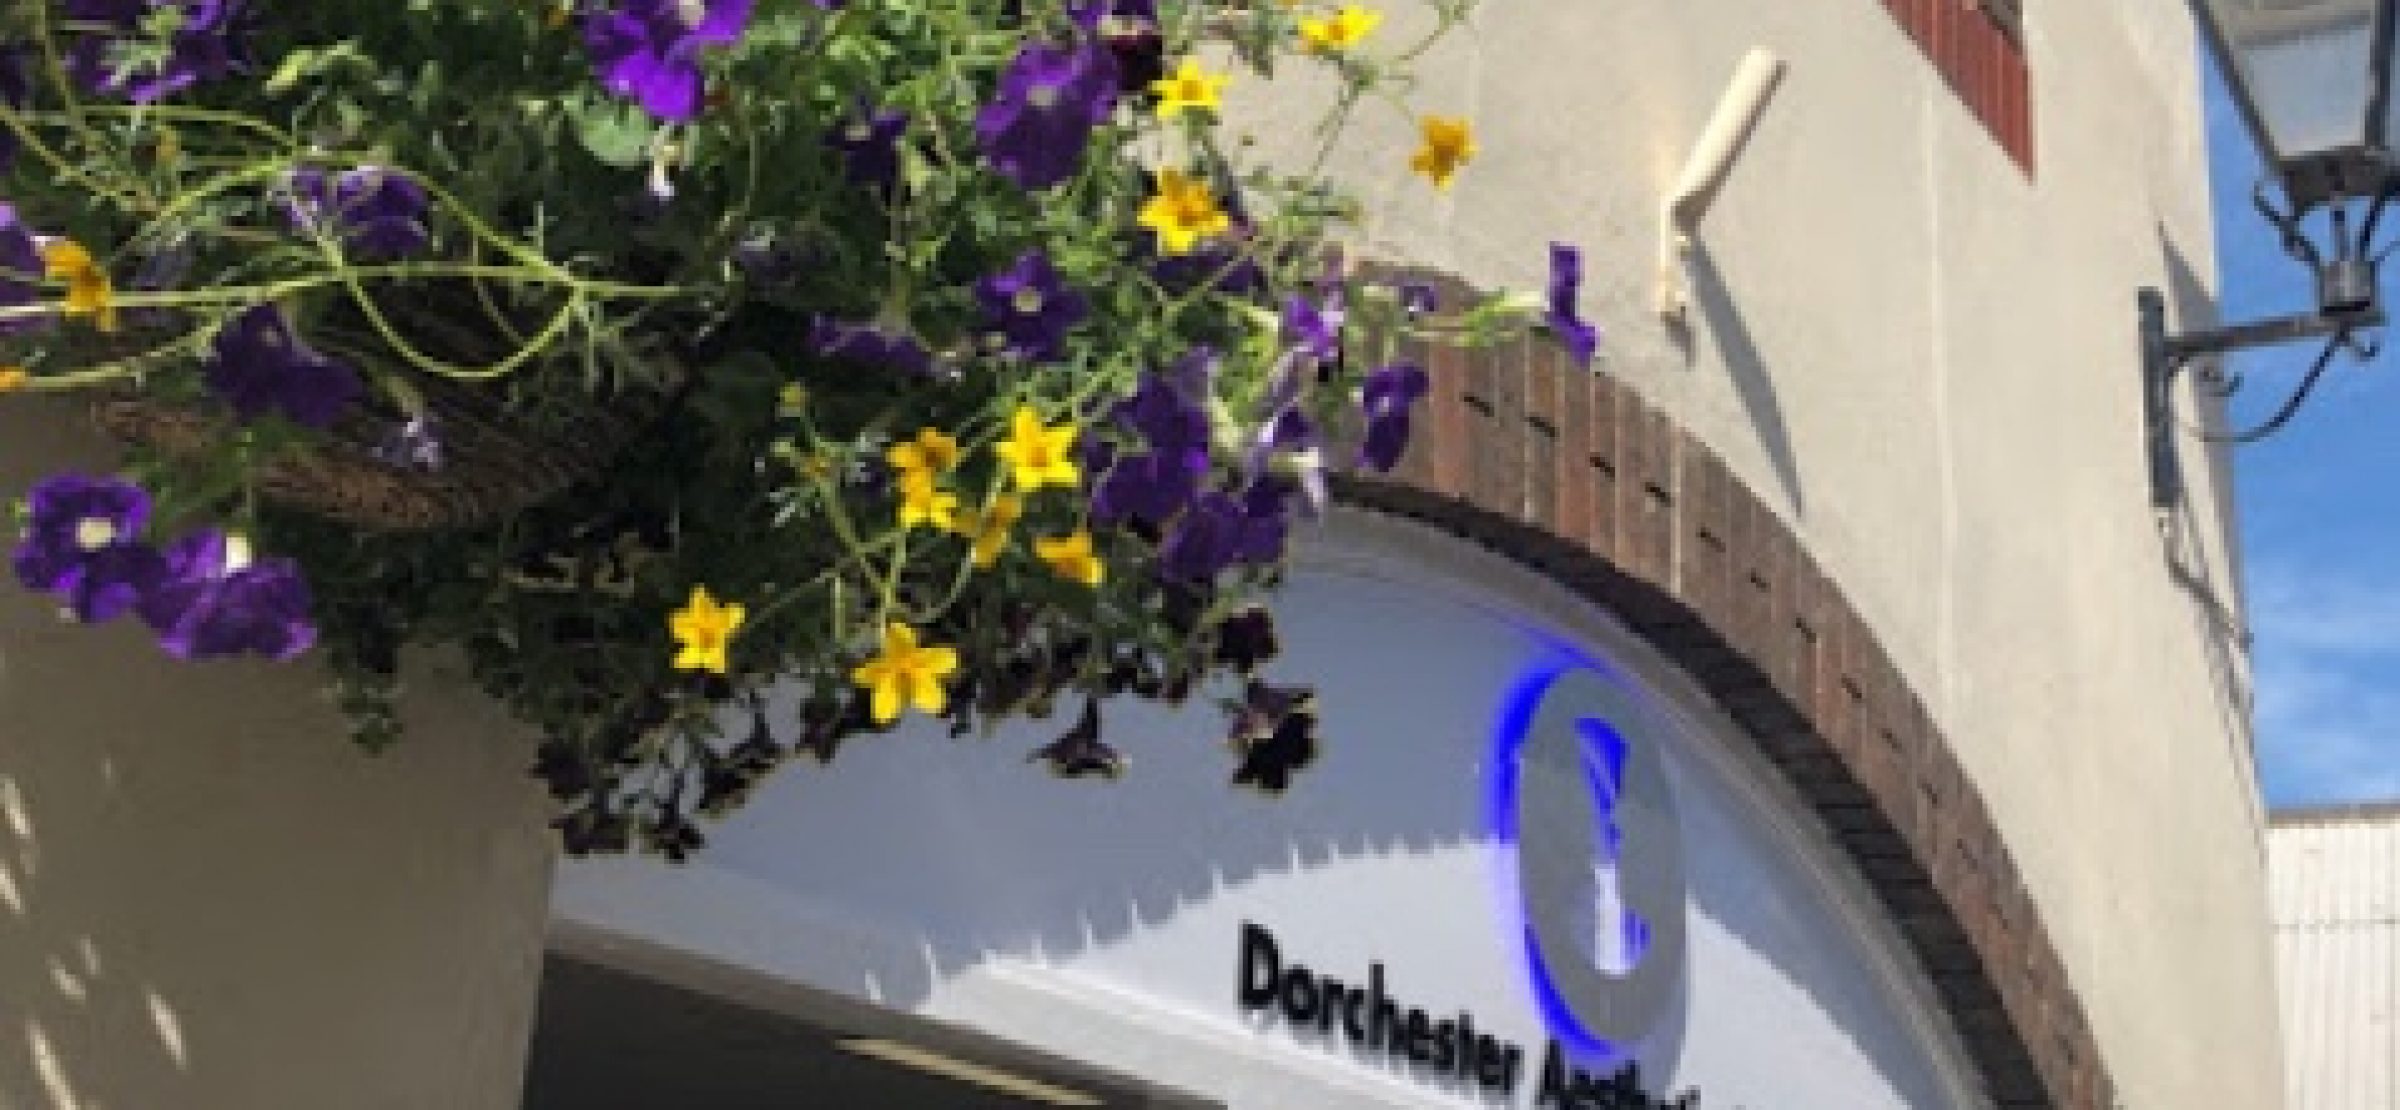 Dorchester Aesthetics Centre